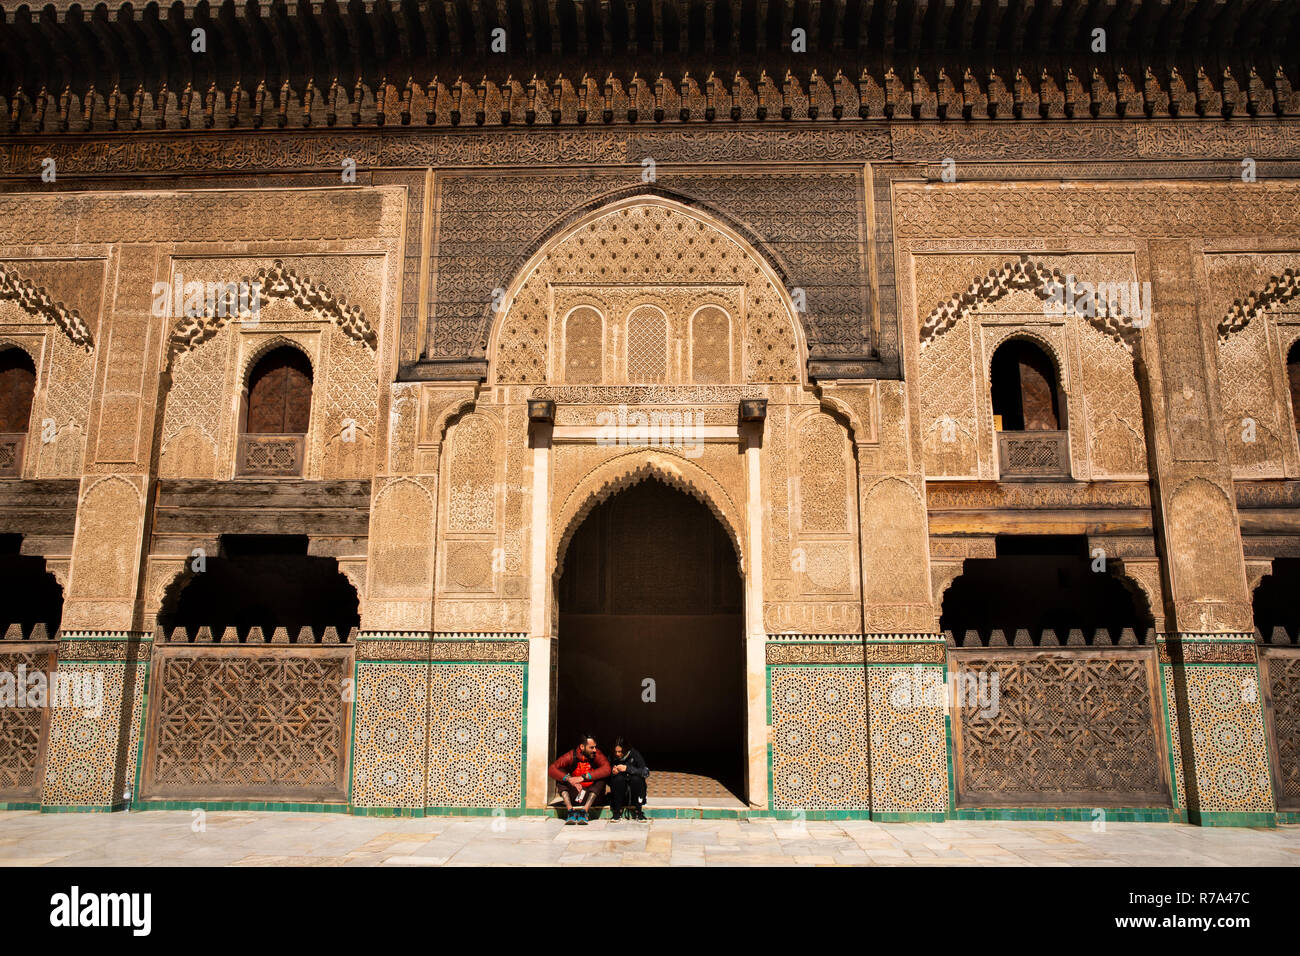 Morocco, Fes, Fes el Bali, Medina, Talaa Seghira, Medersa Bou Inania, young tourists sat in door Stock Photo